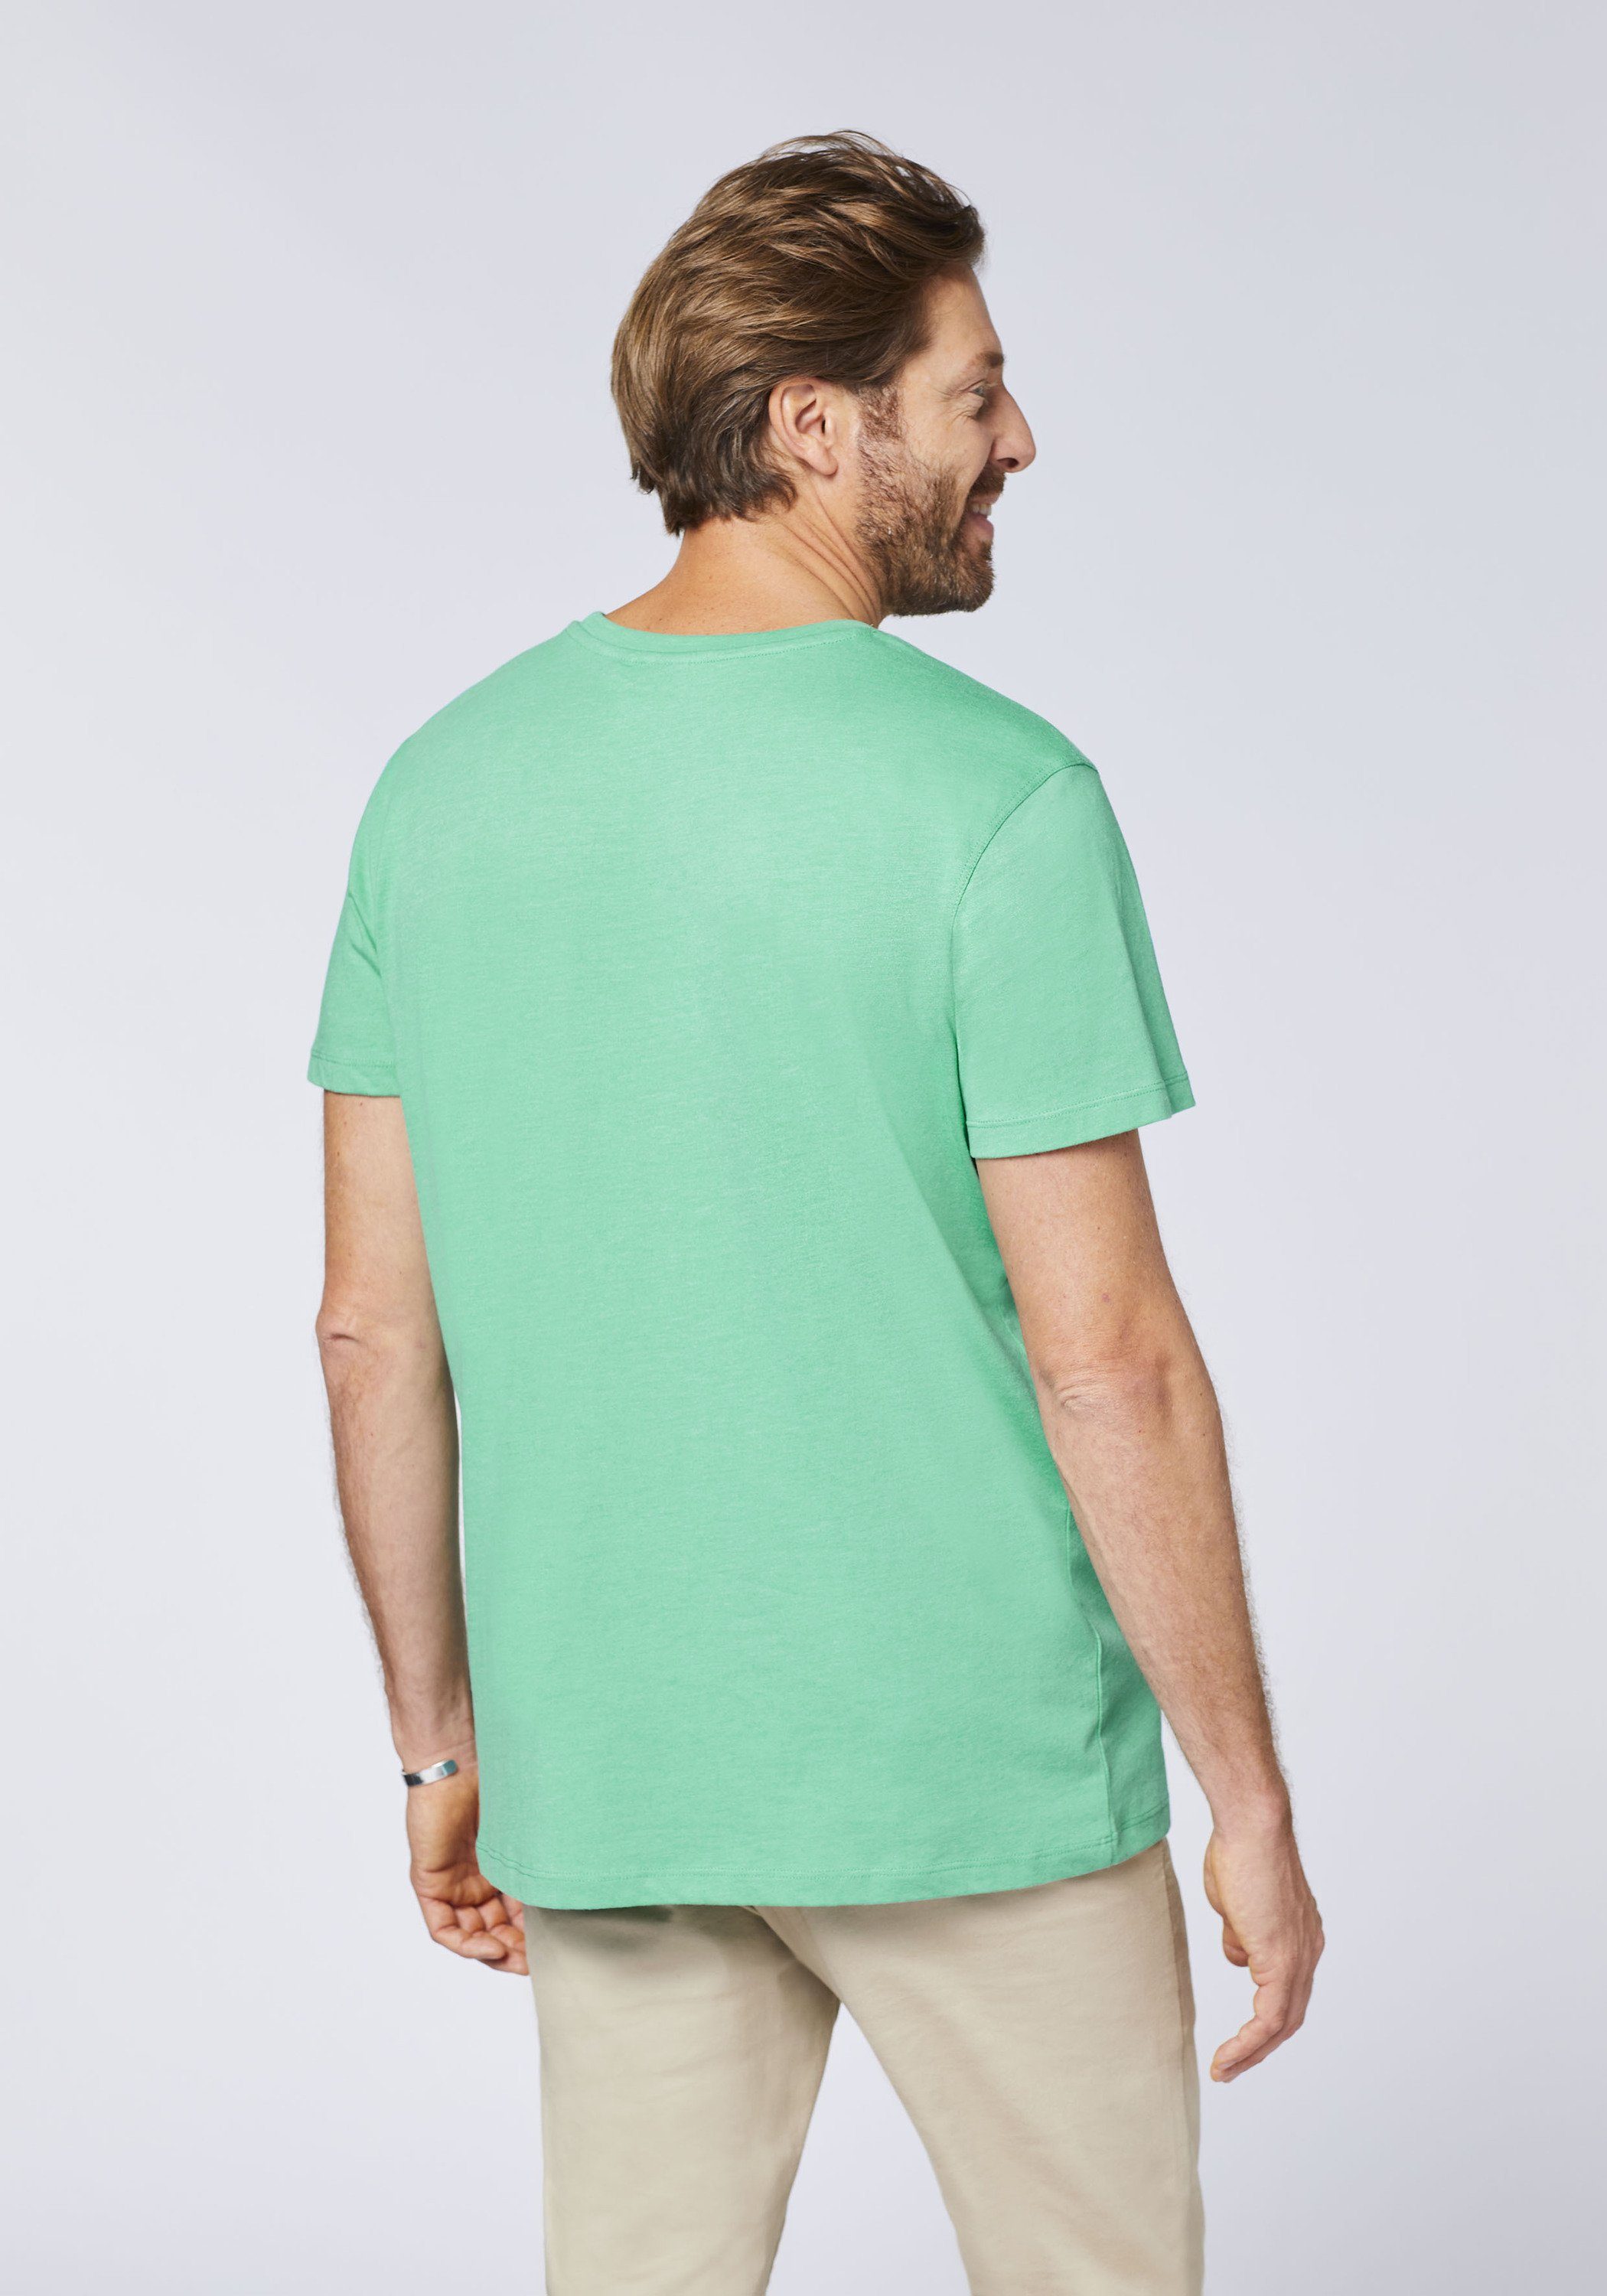 mit Polo 16-5721 Marine Print-Shirt Logo-Schriftzug Green Sylt